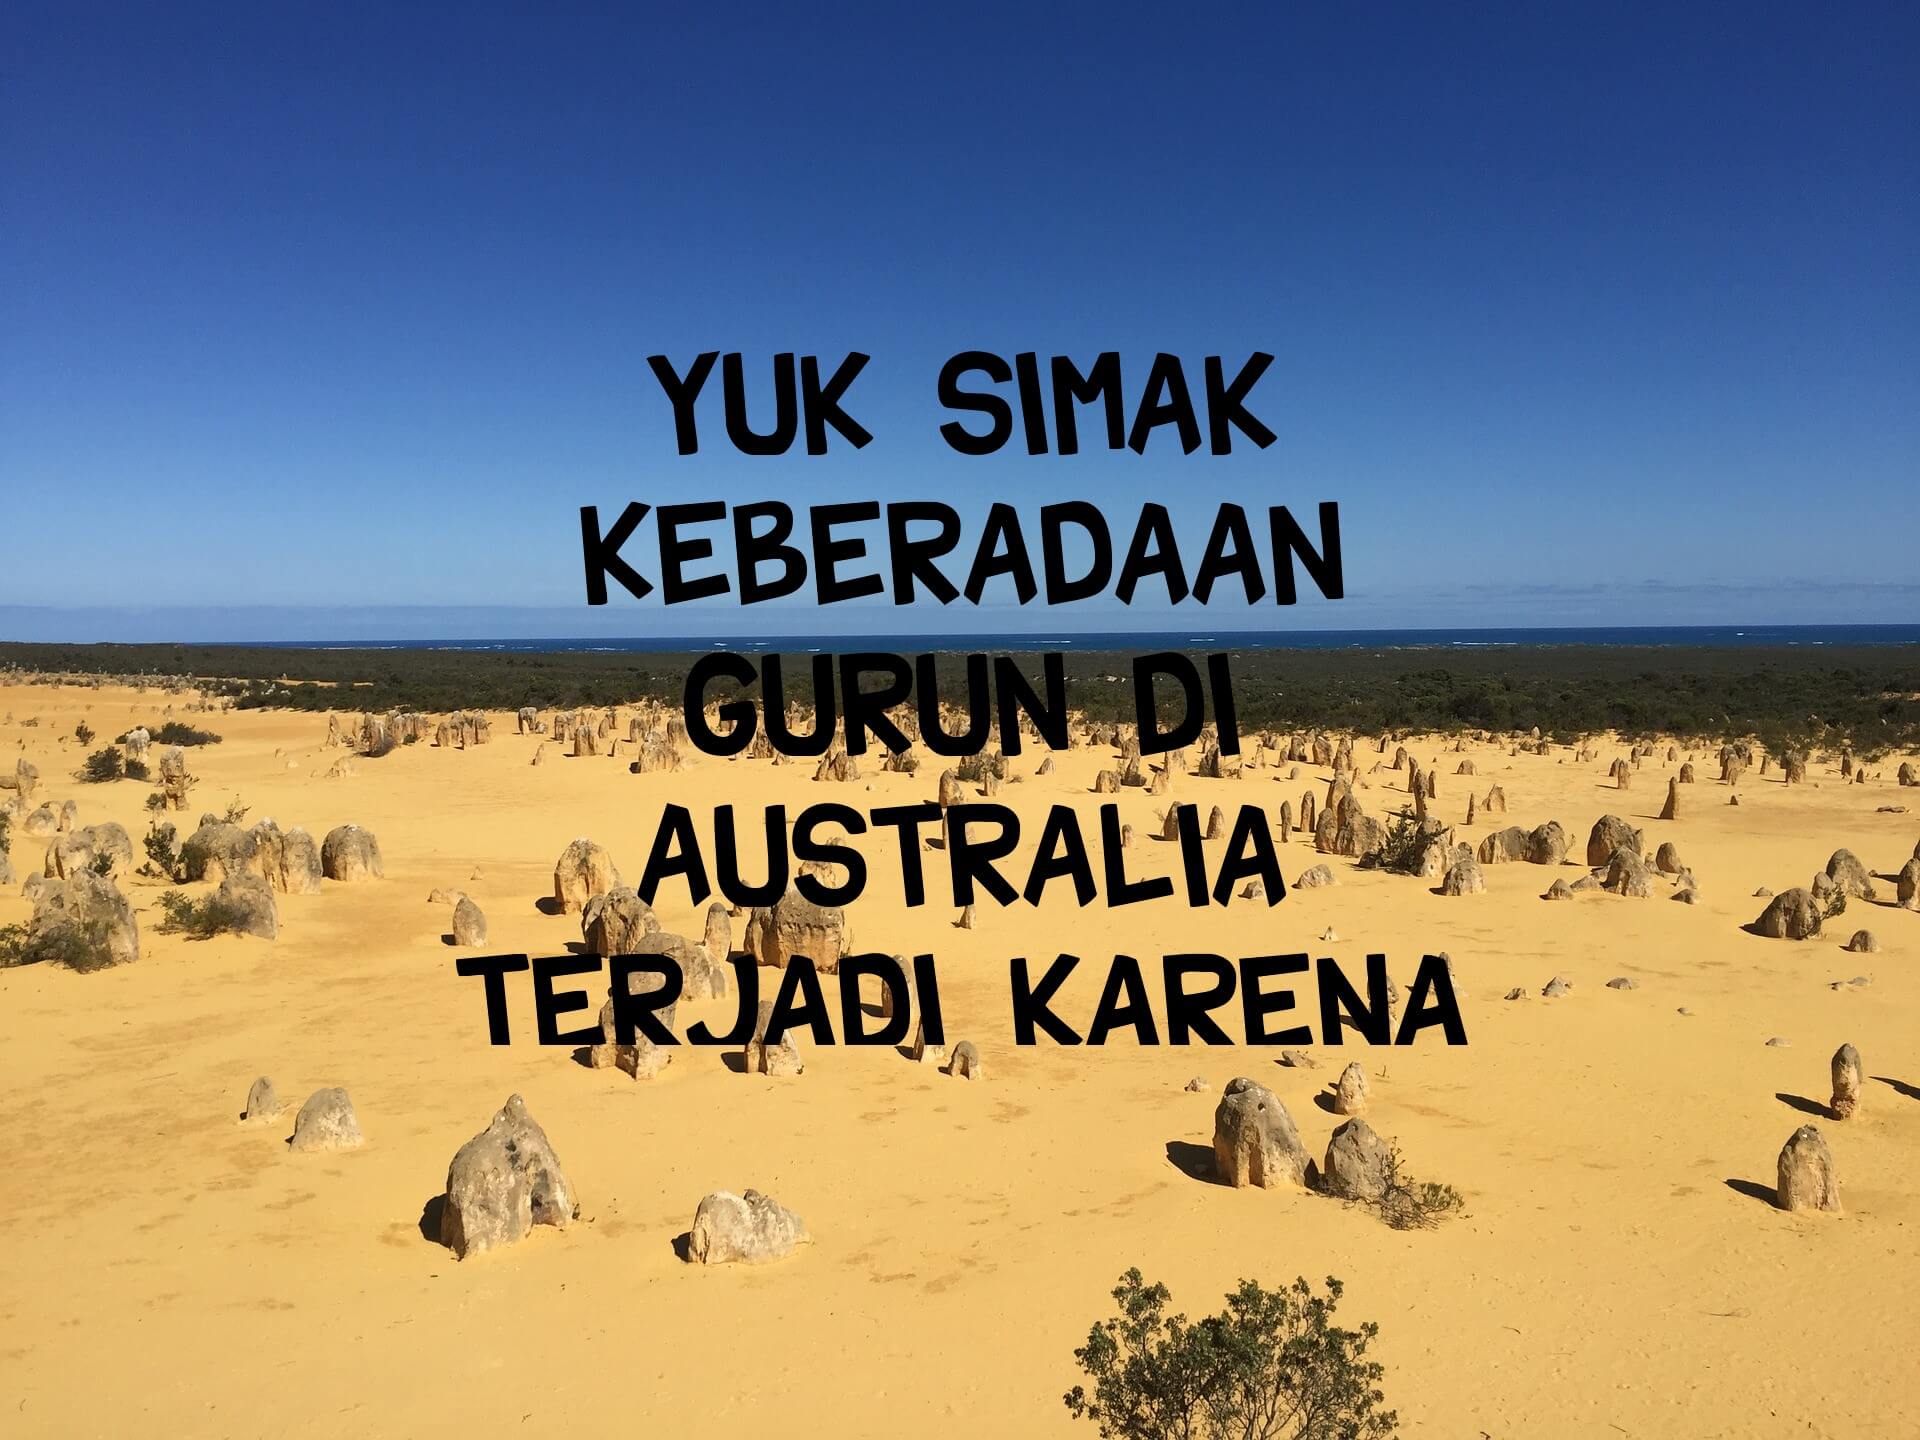 Di terjadi keberadaan australia gurun benua victoria australia karena ENJOY GEOGRAPHY: